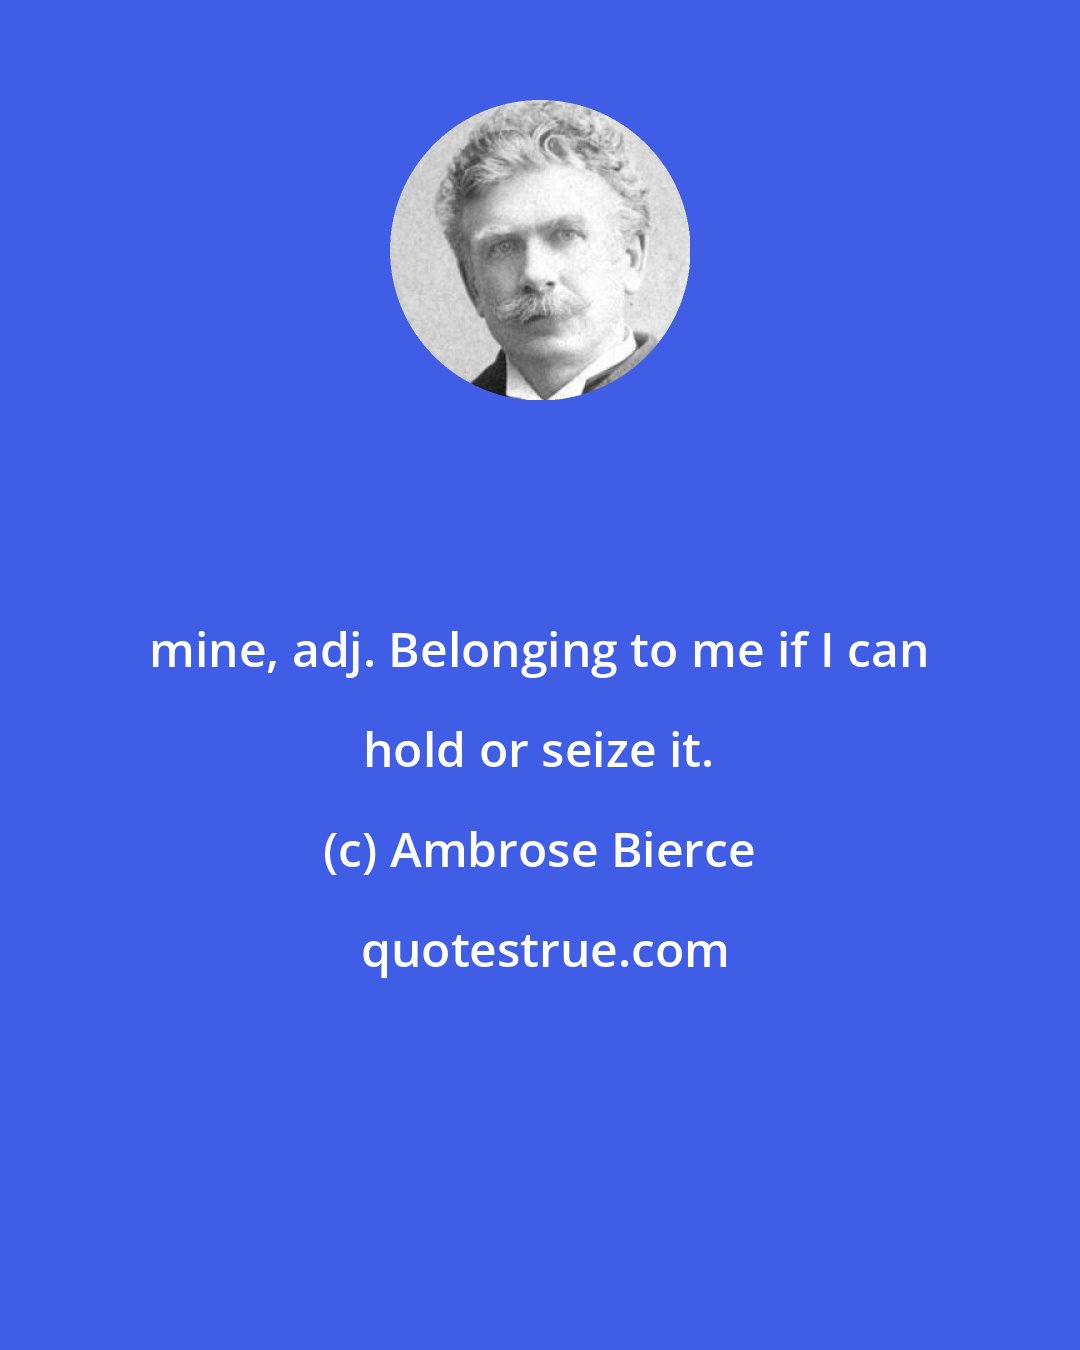 Ambrose Bierce: mine, adj. Belonging to me if I can hold or seize it.